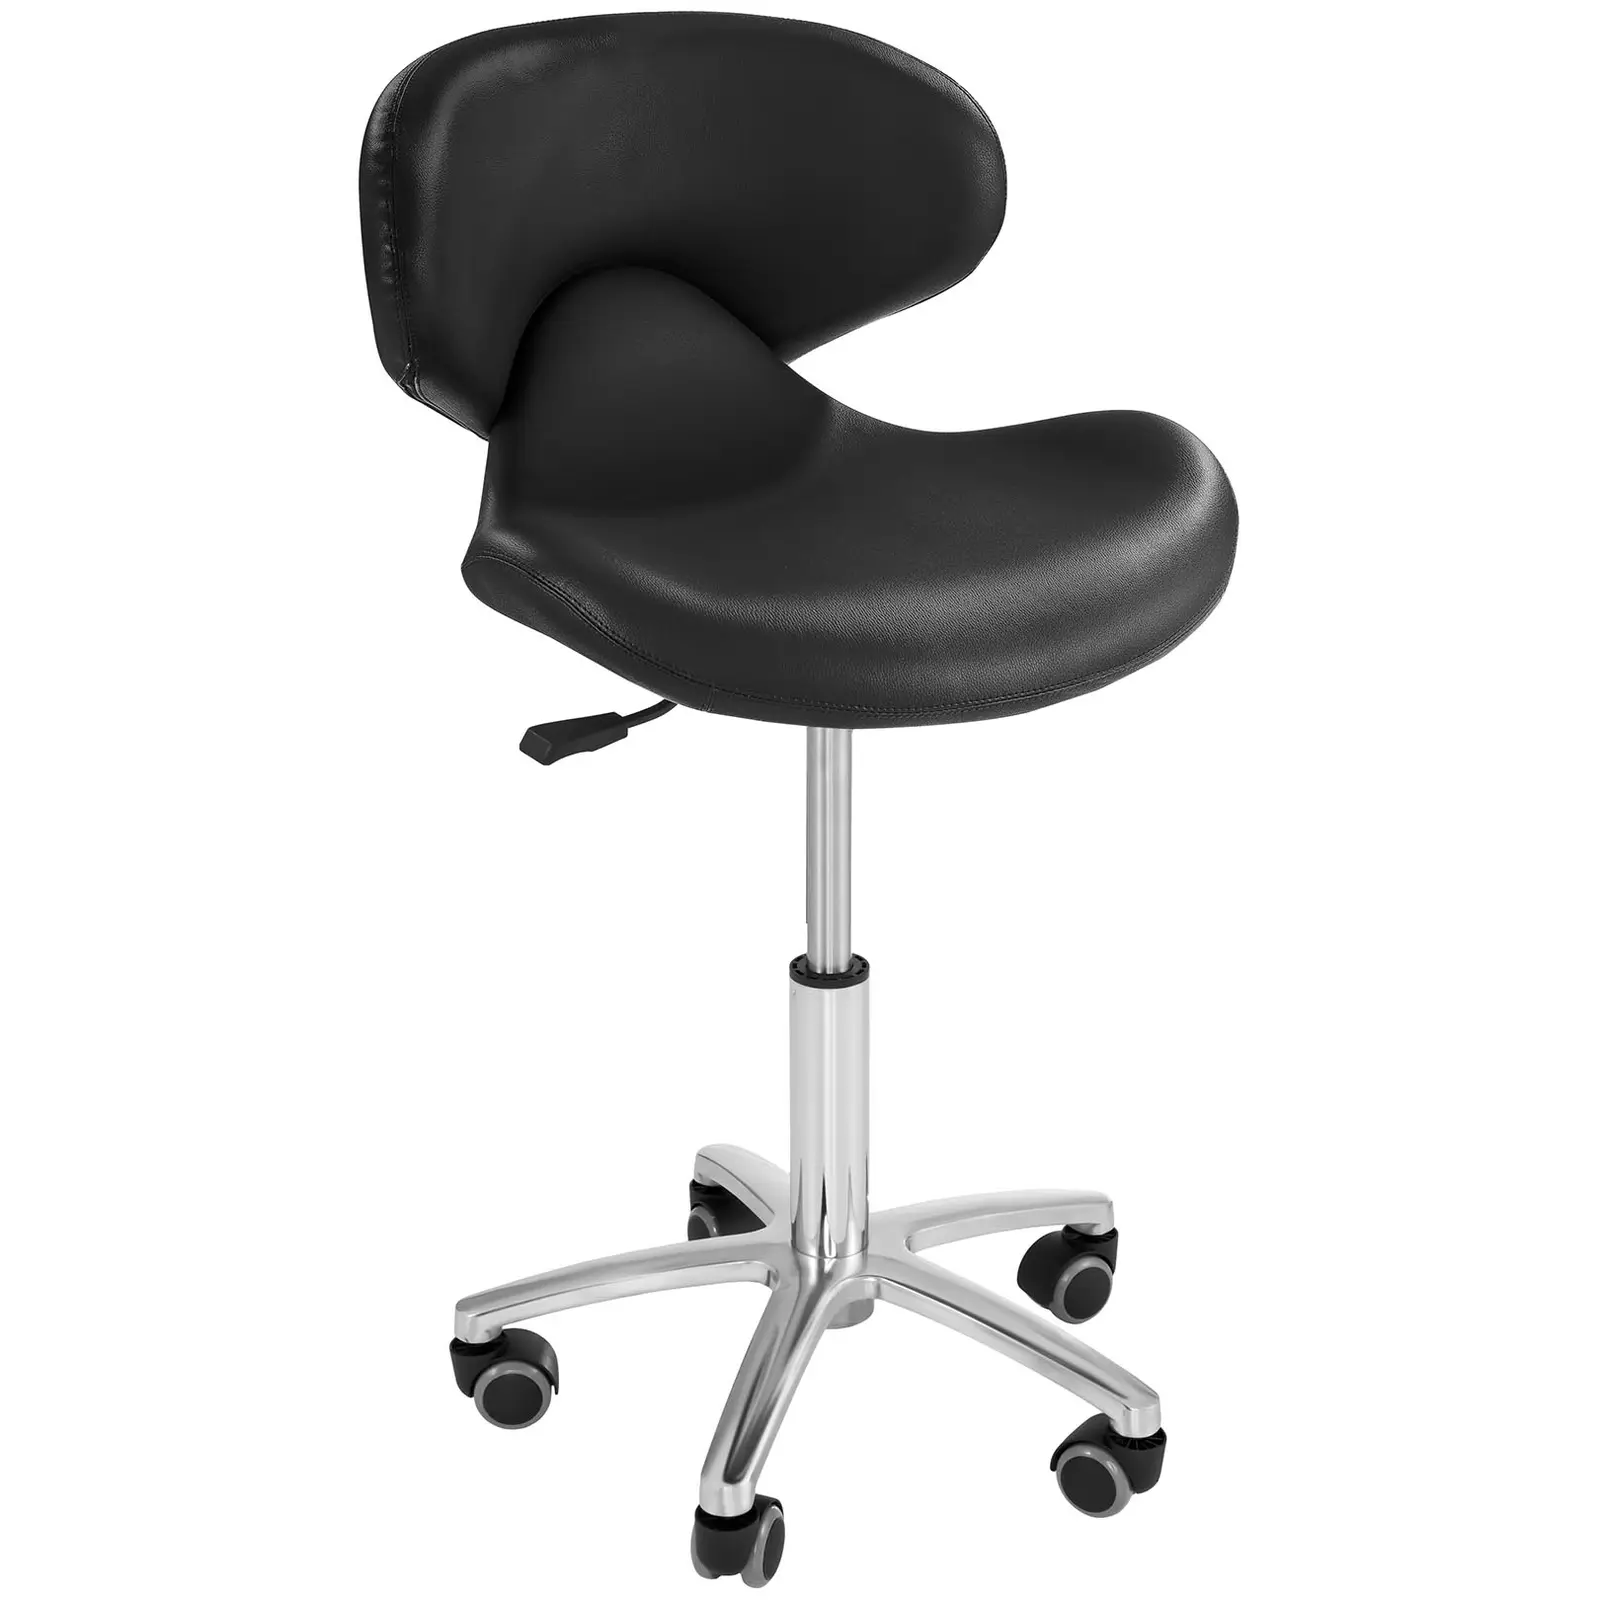 Hairdresser's chair - 44-570 mm - 150 kg - Black